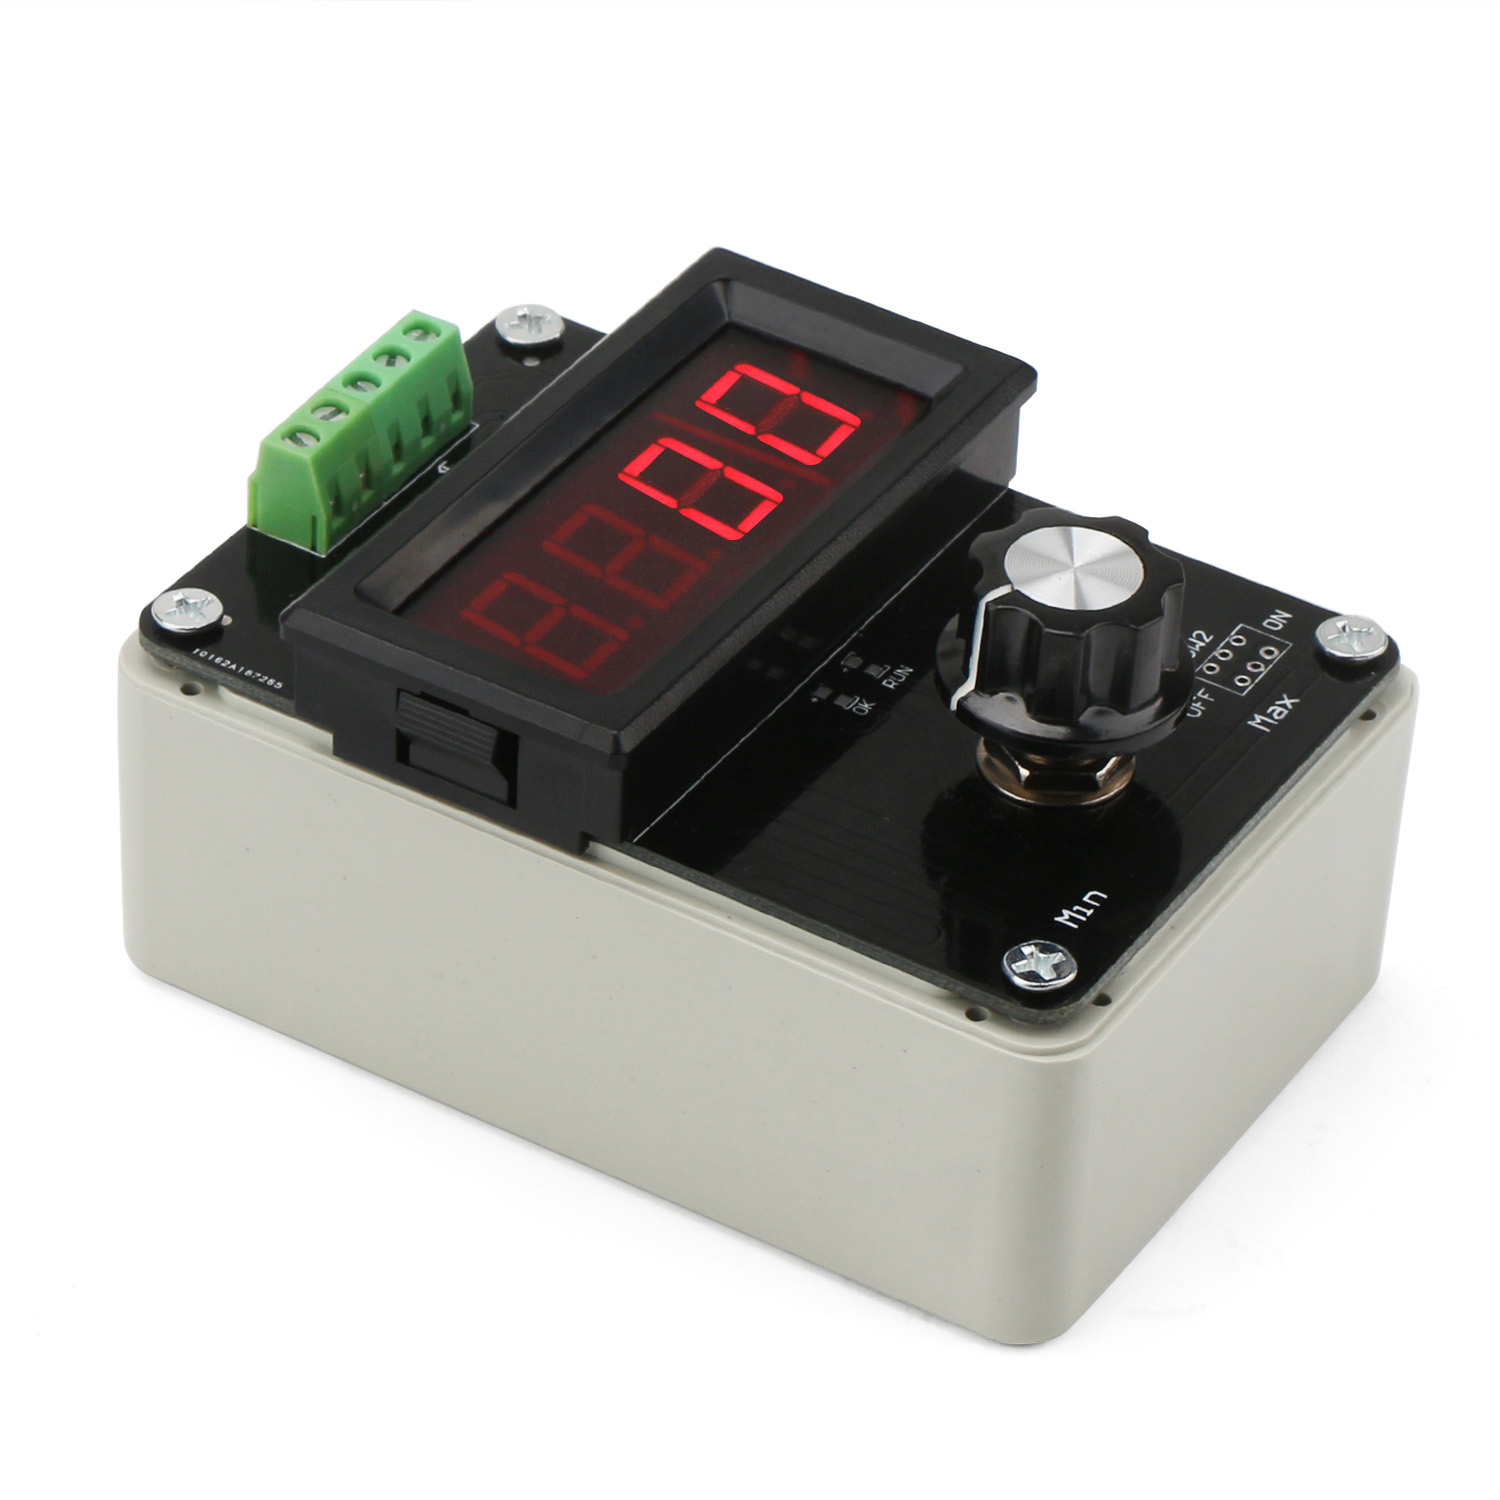 DC 0.1mA/4-20mA Adjustable Digital Current Signal Generator Module Board K9 